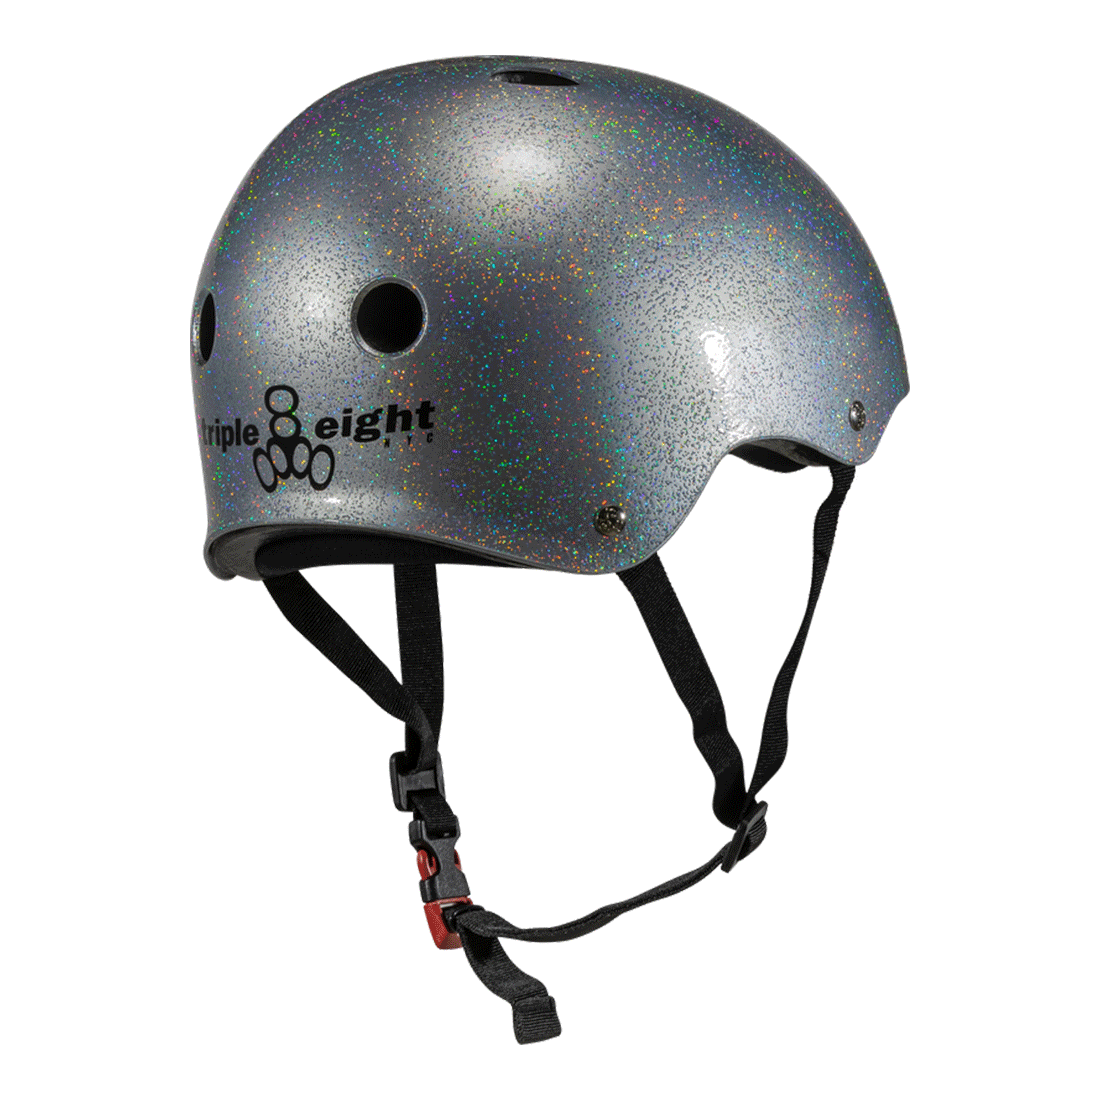 Triple 8 THE Cert SS Helmet - Silver Glitter Helmets